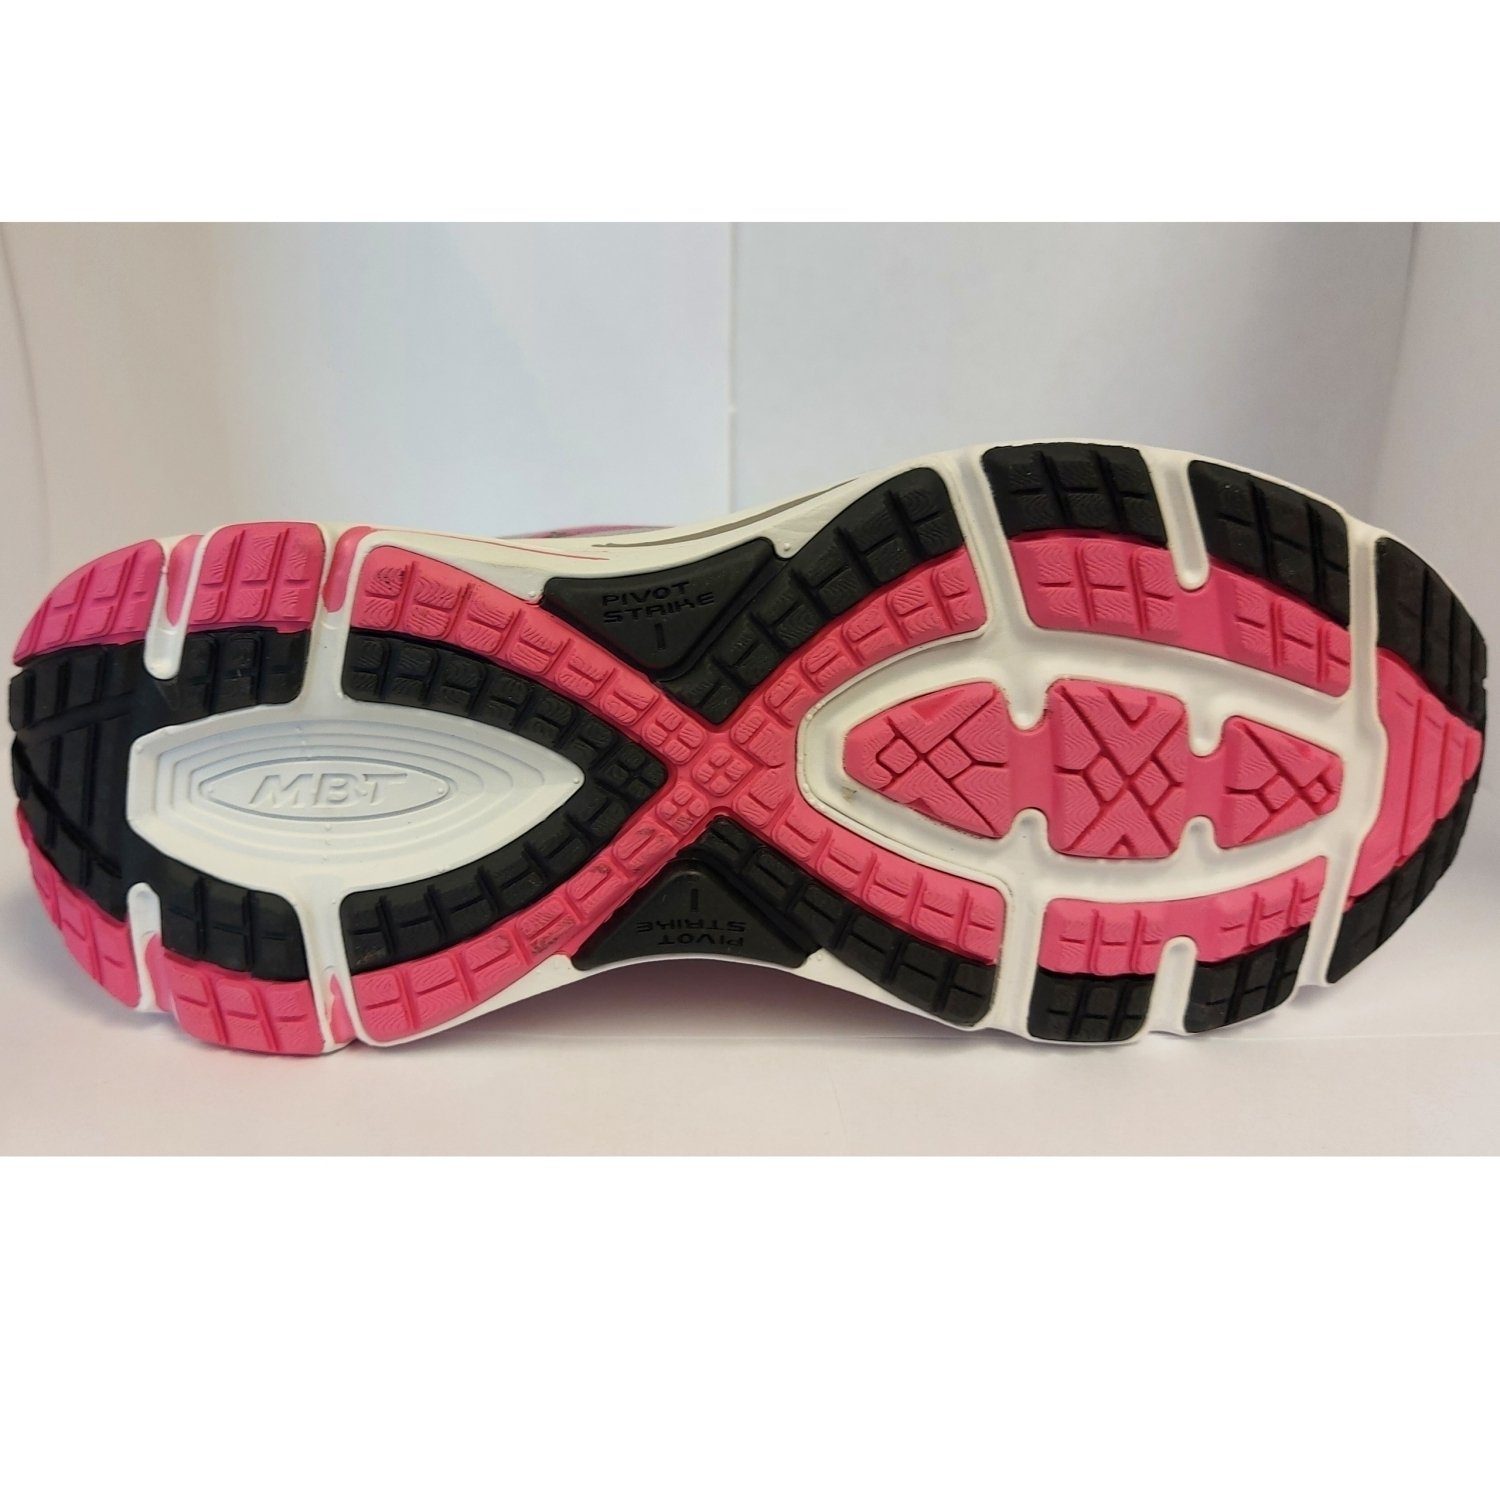 grau Sportschuhe MBT Sneaker Damen LACE W pink grey UP GTC-2000 rosa /